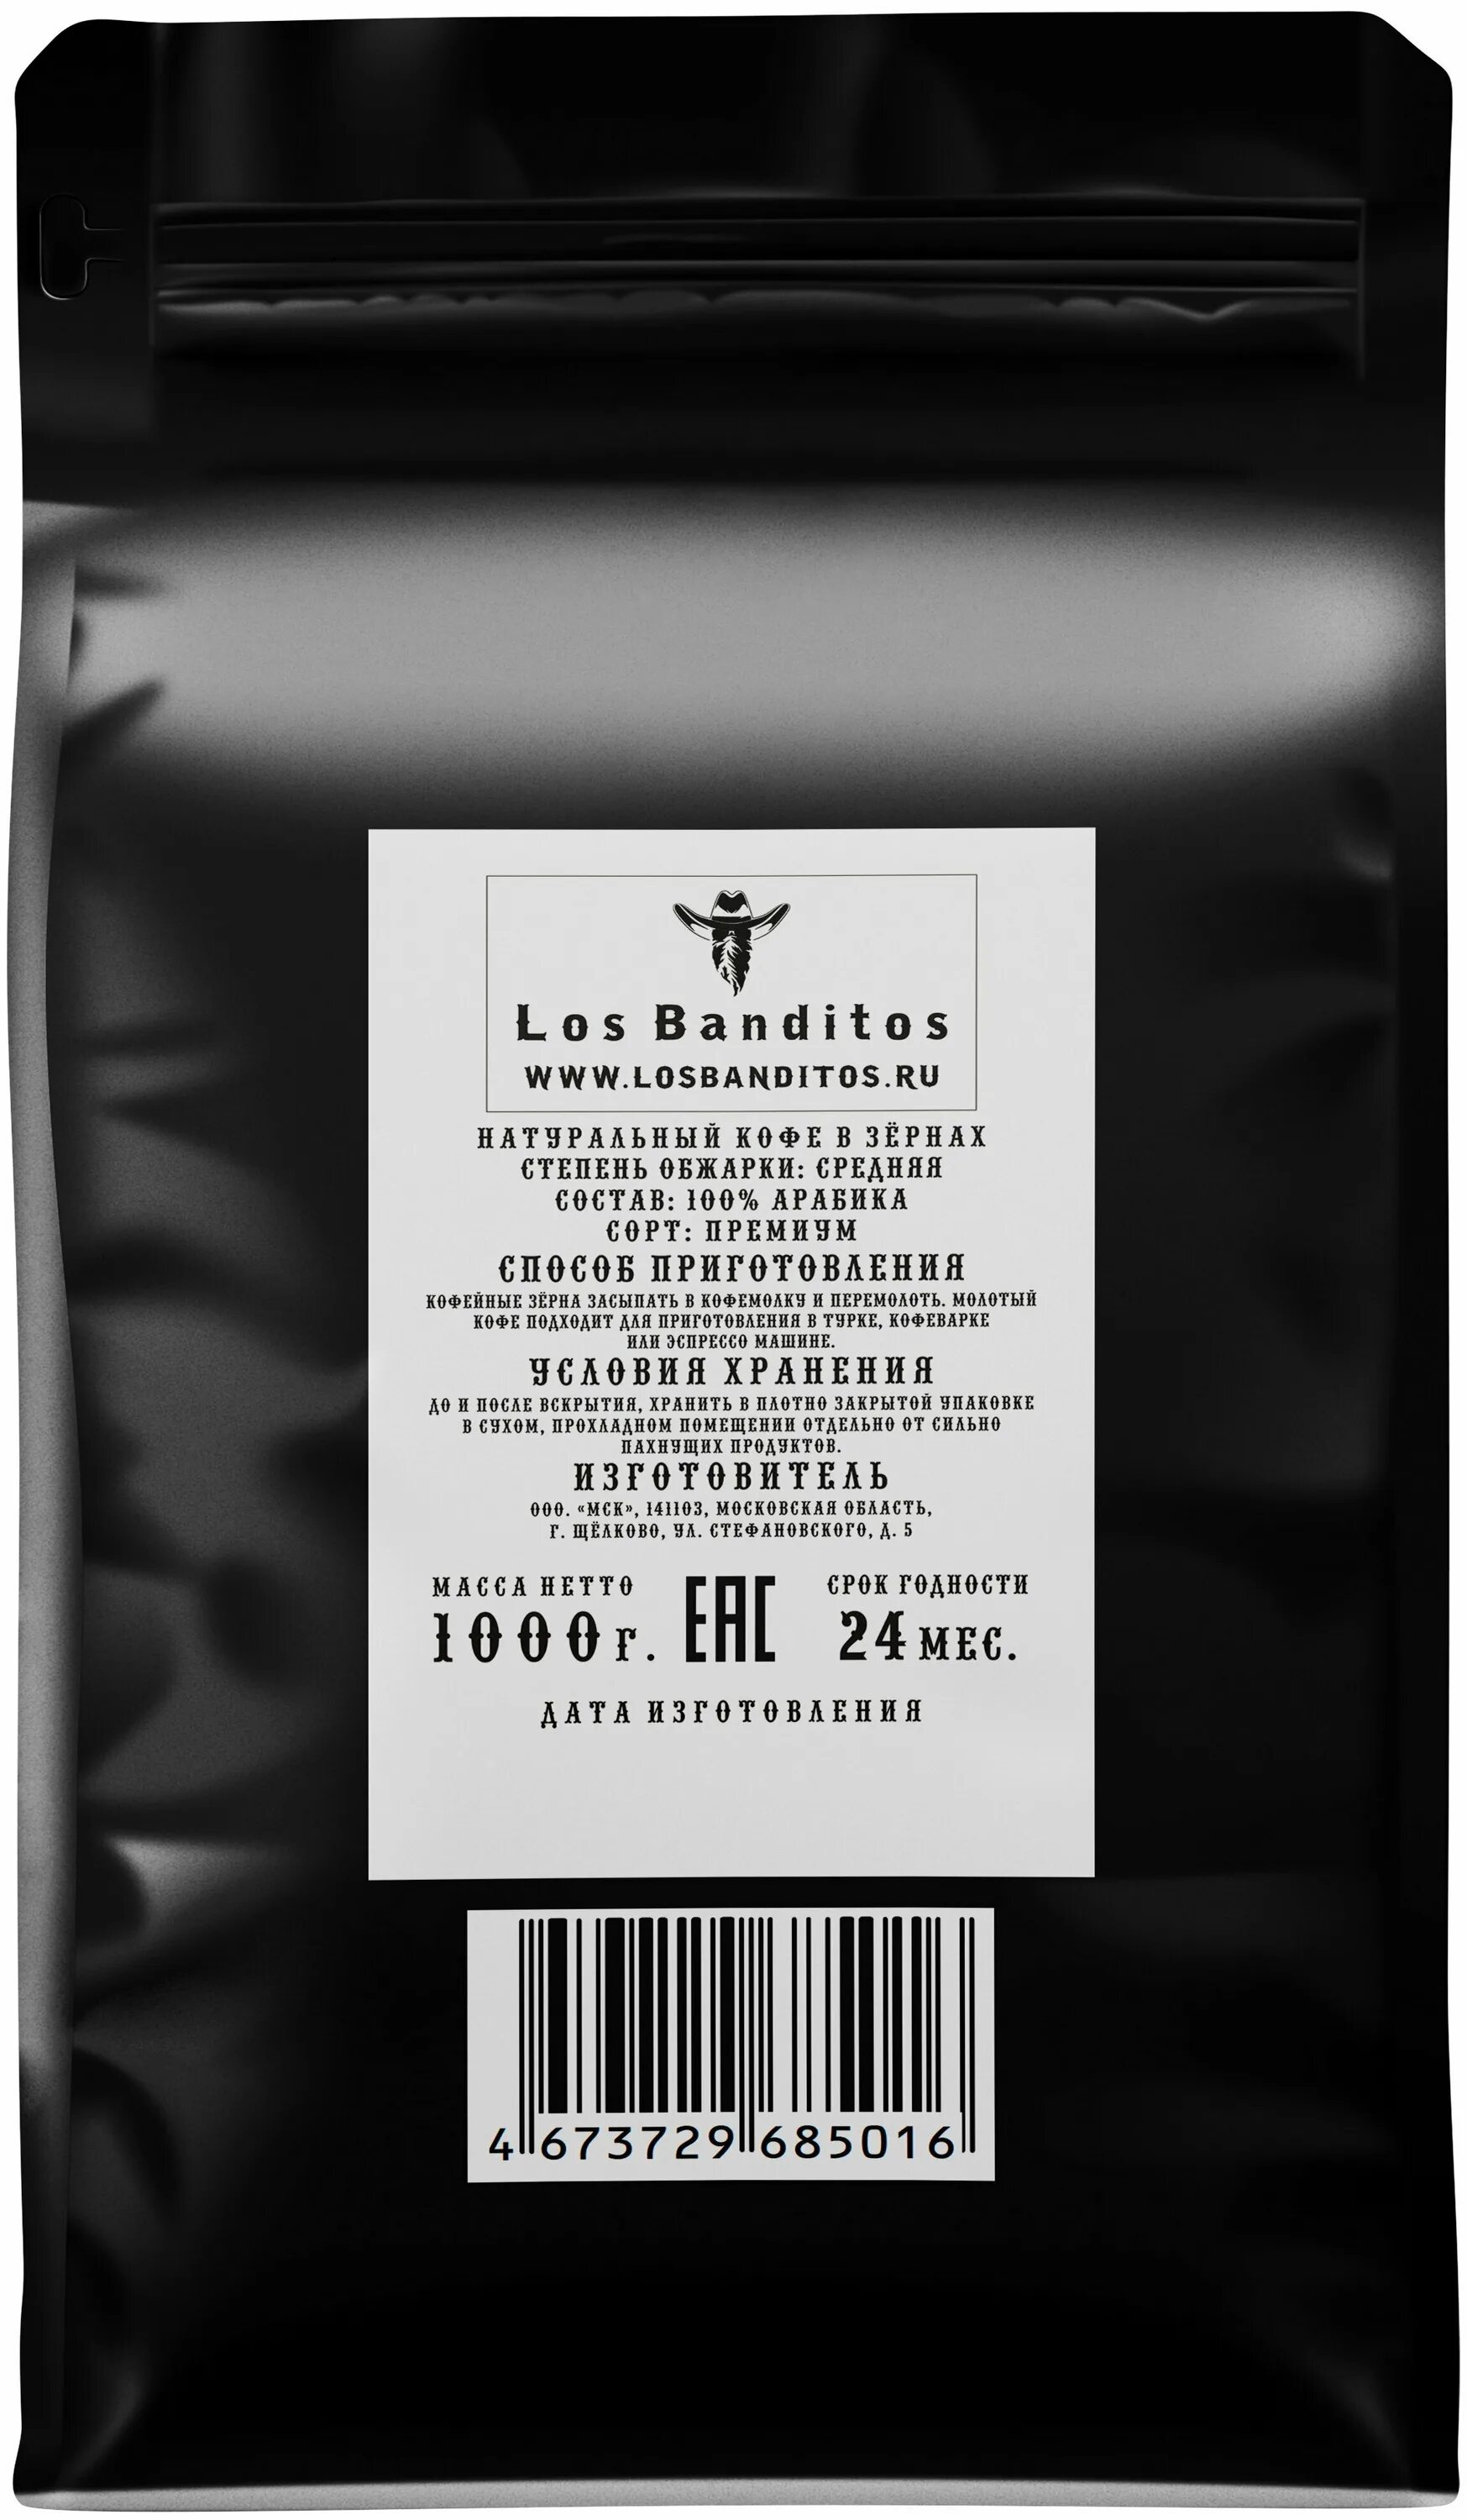 Los Banditos кофе в зернах. Кофе Лос Бандитос цена в зернах. Оригинал Колумбия puta madre Лос Бандитос. Корм Бандитос картинки. Лос бандитос